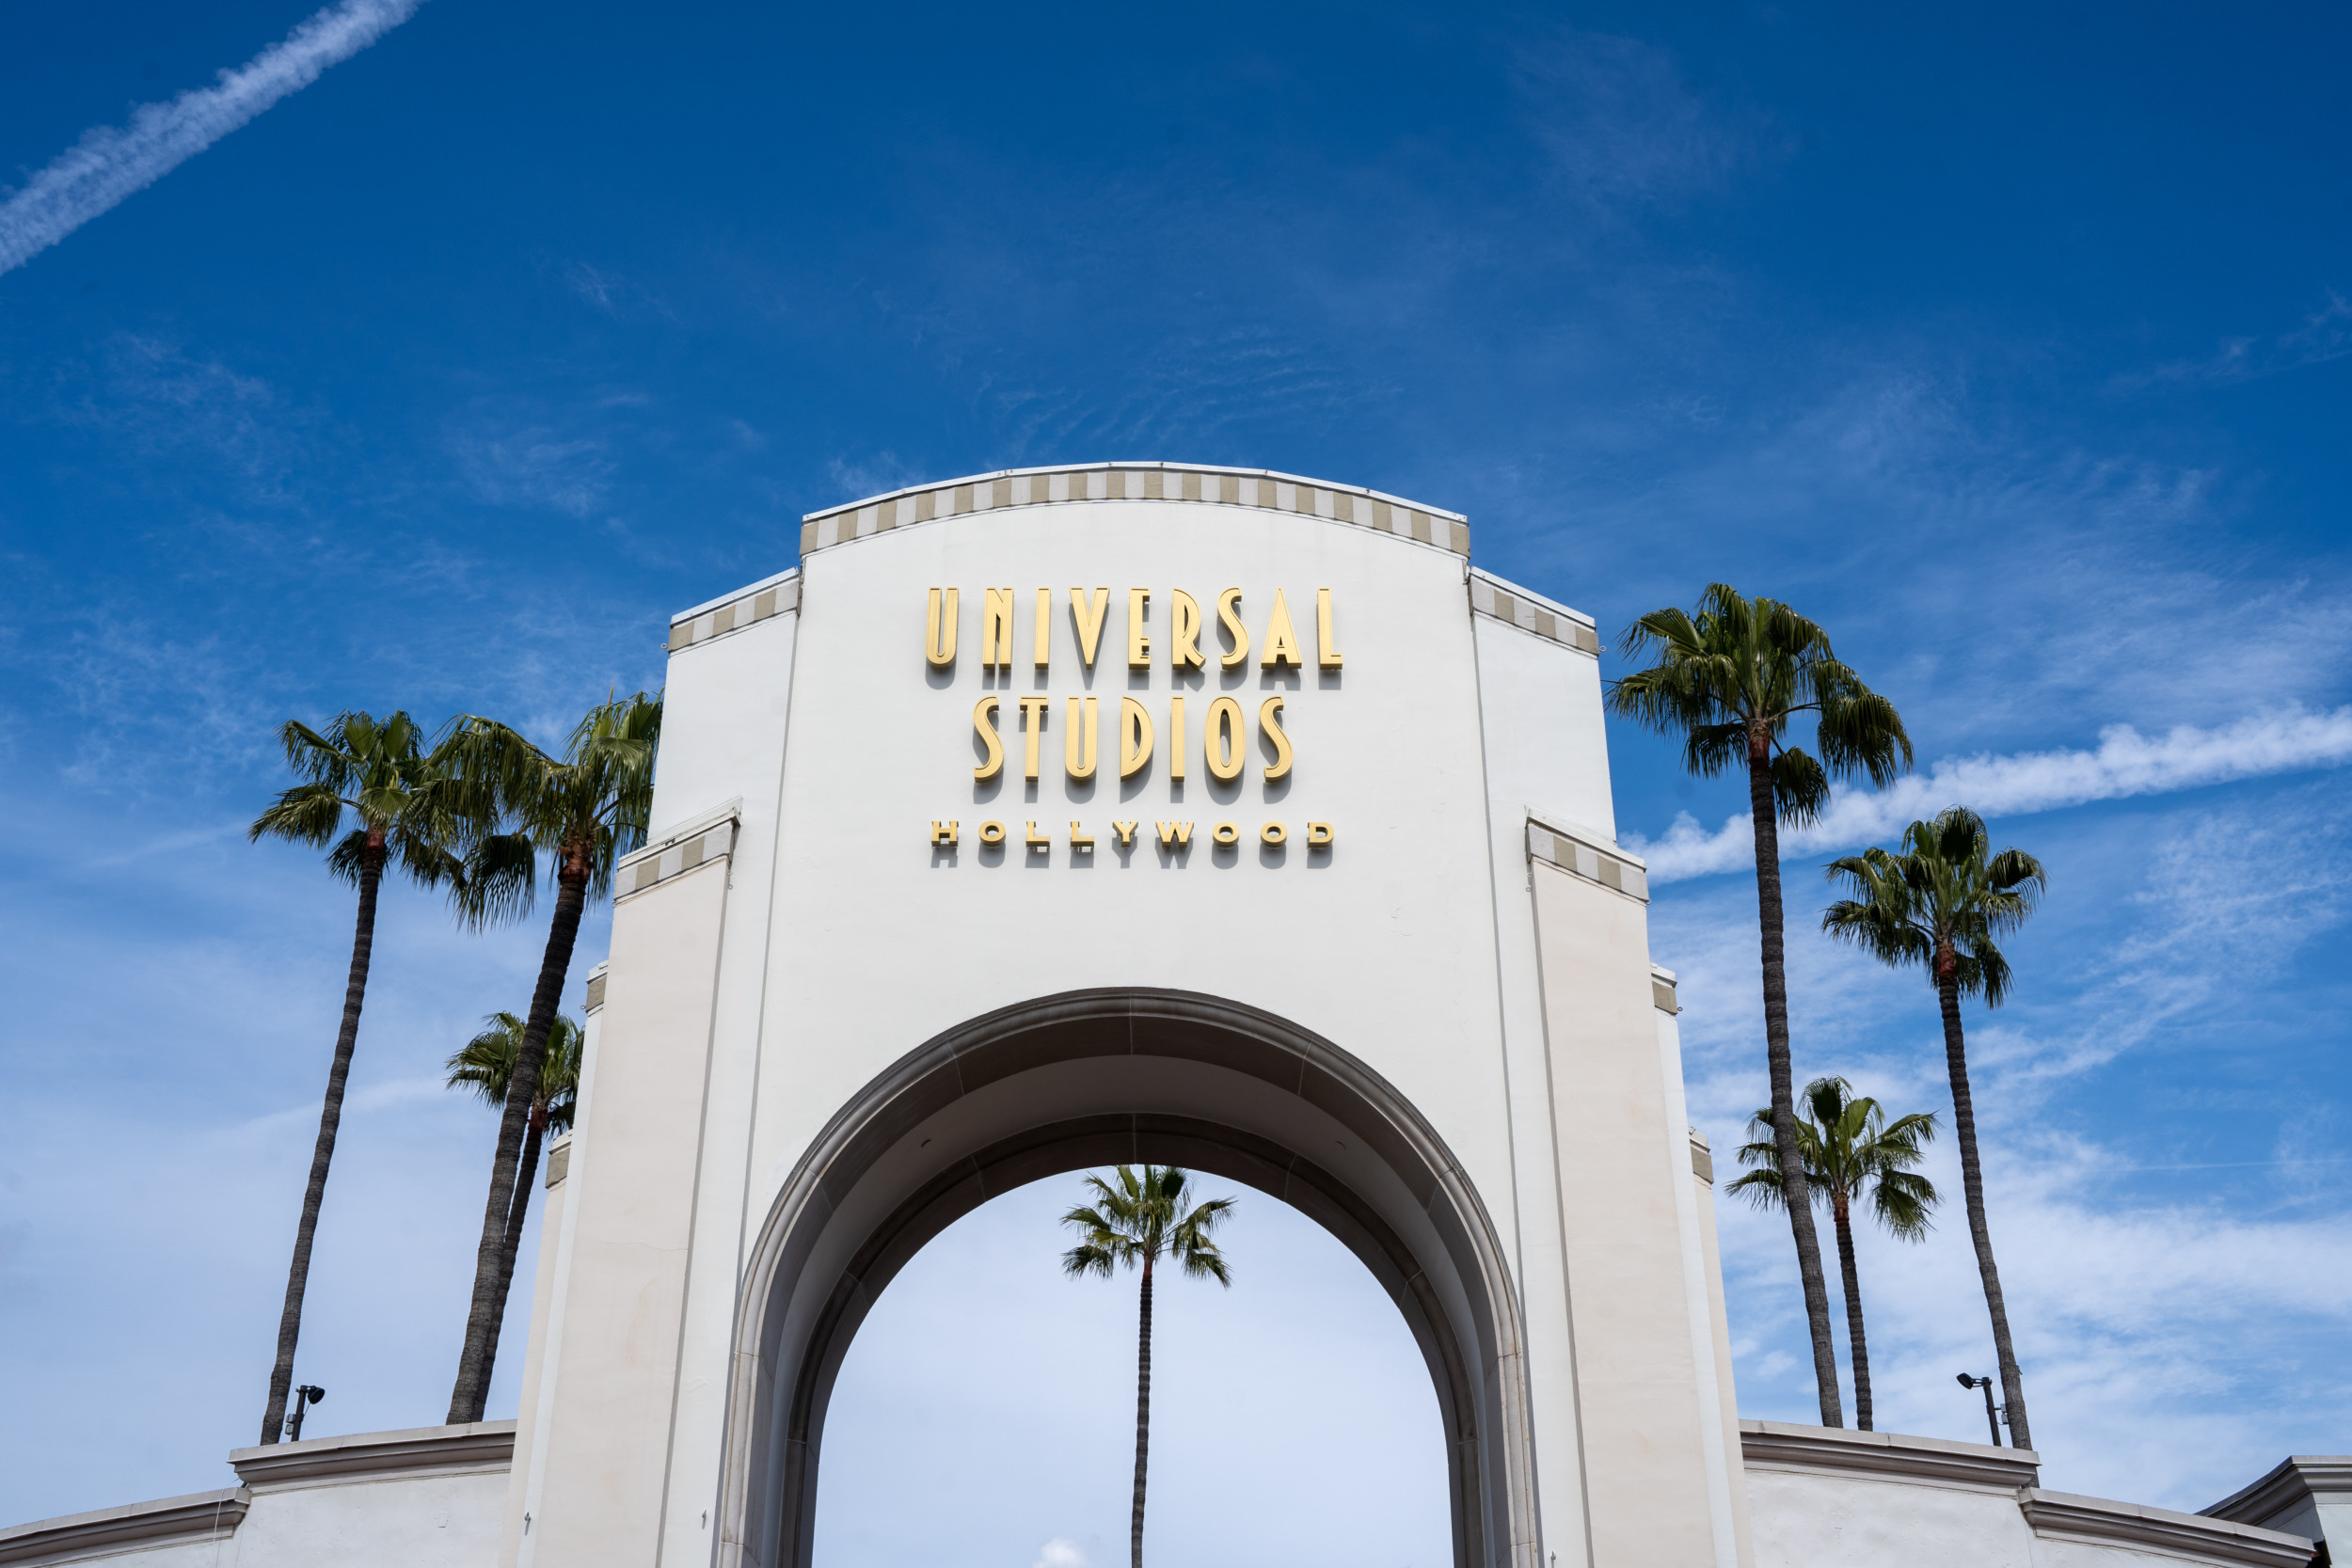 Der Eingang der Universal Studios in Hollywood